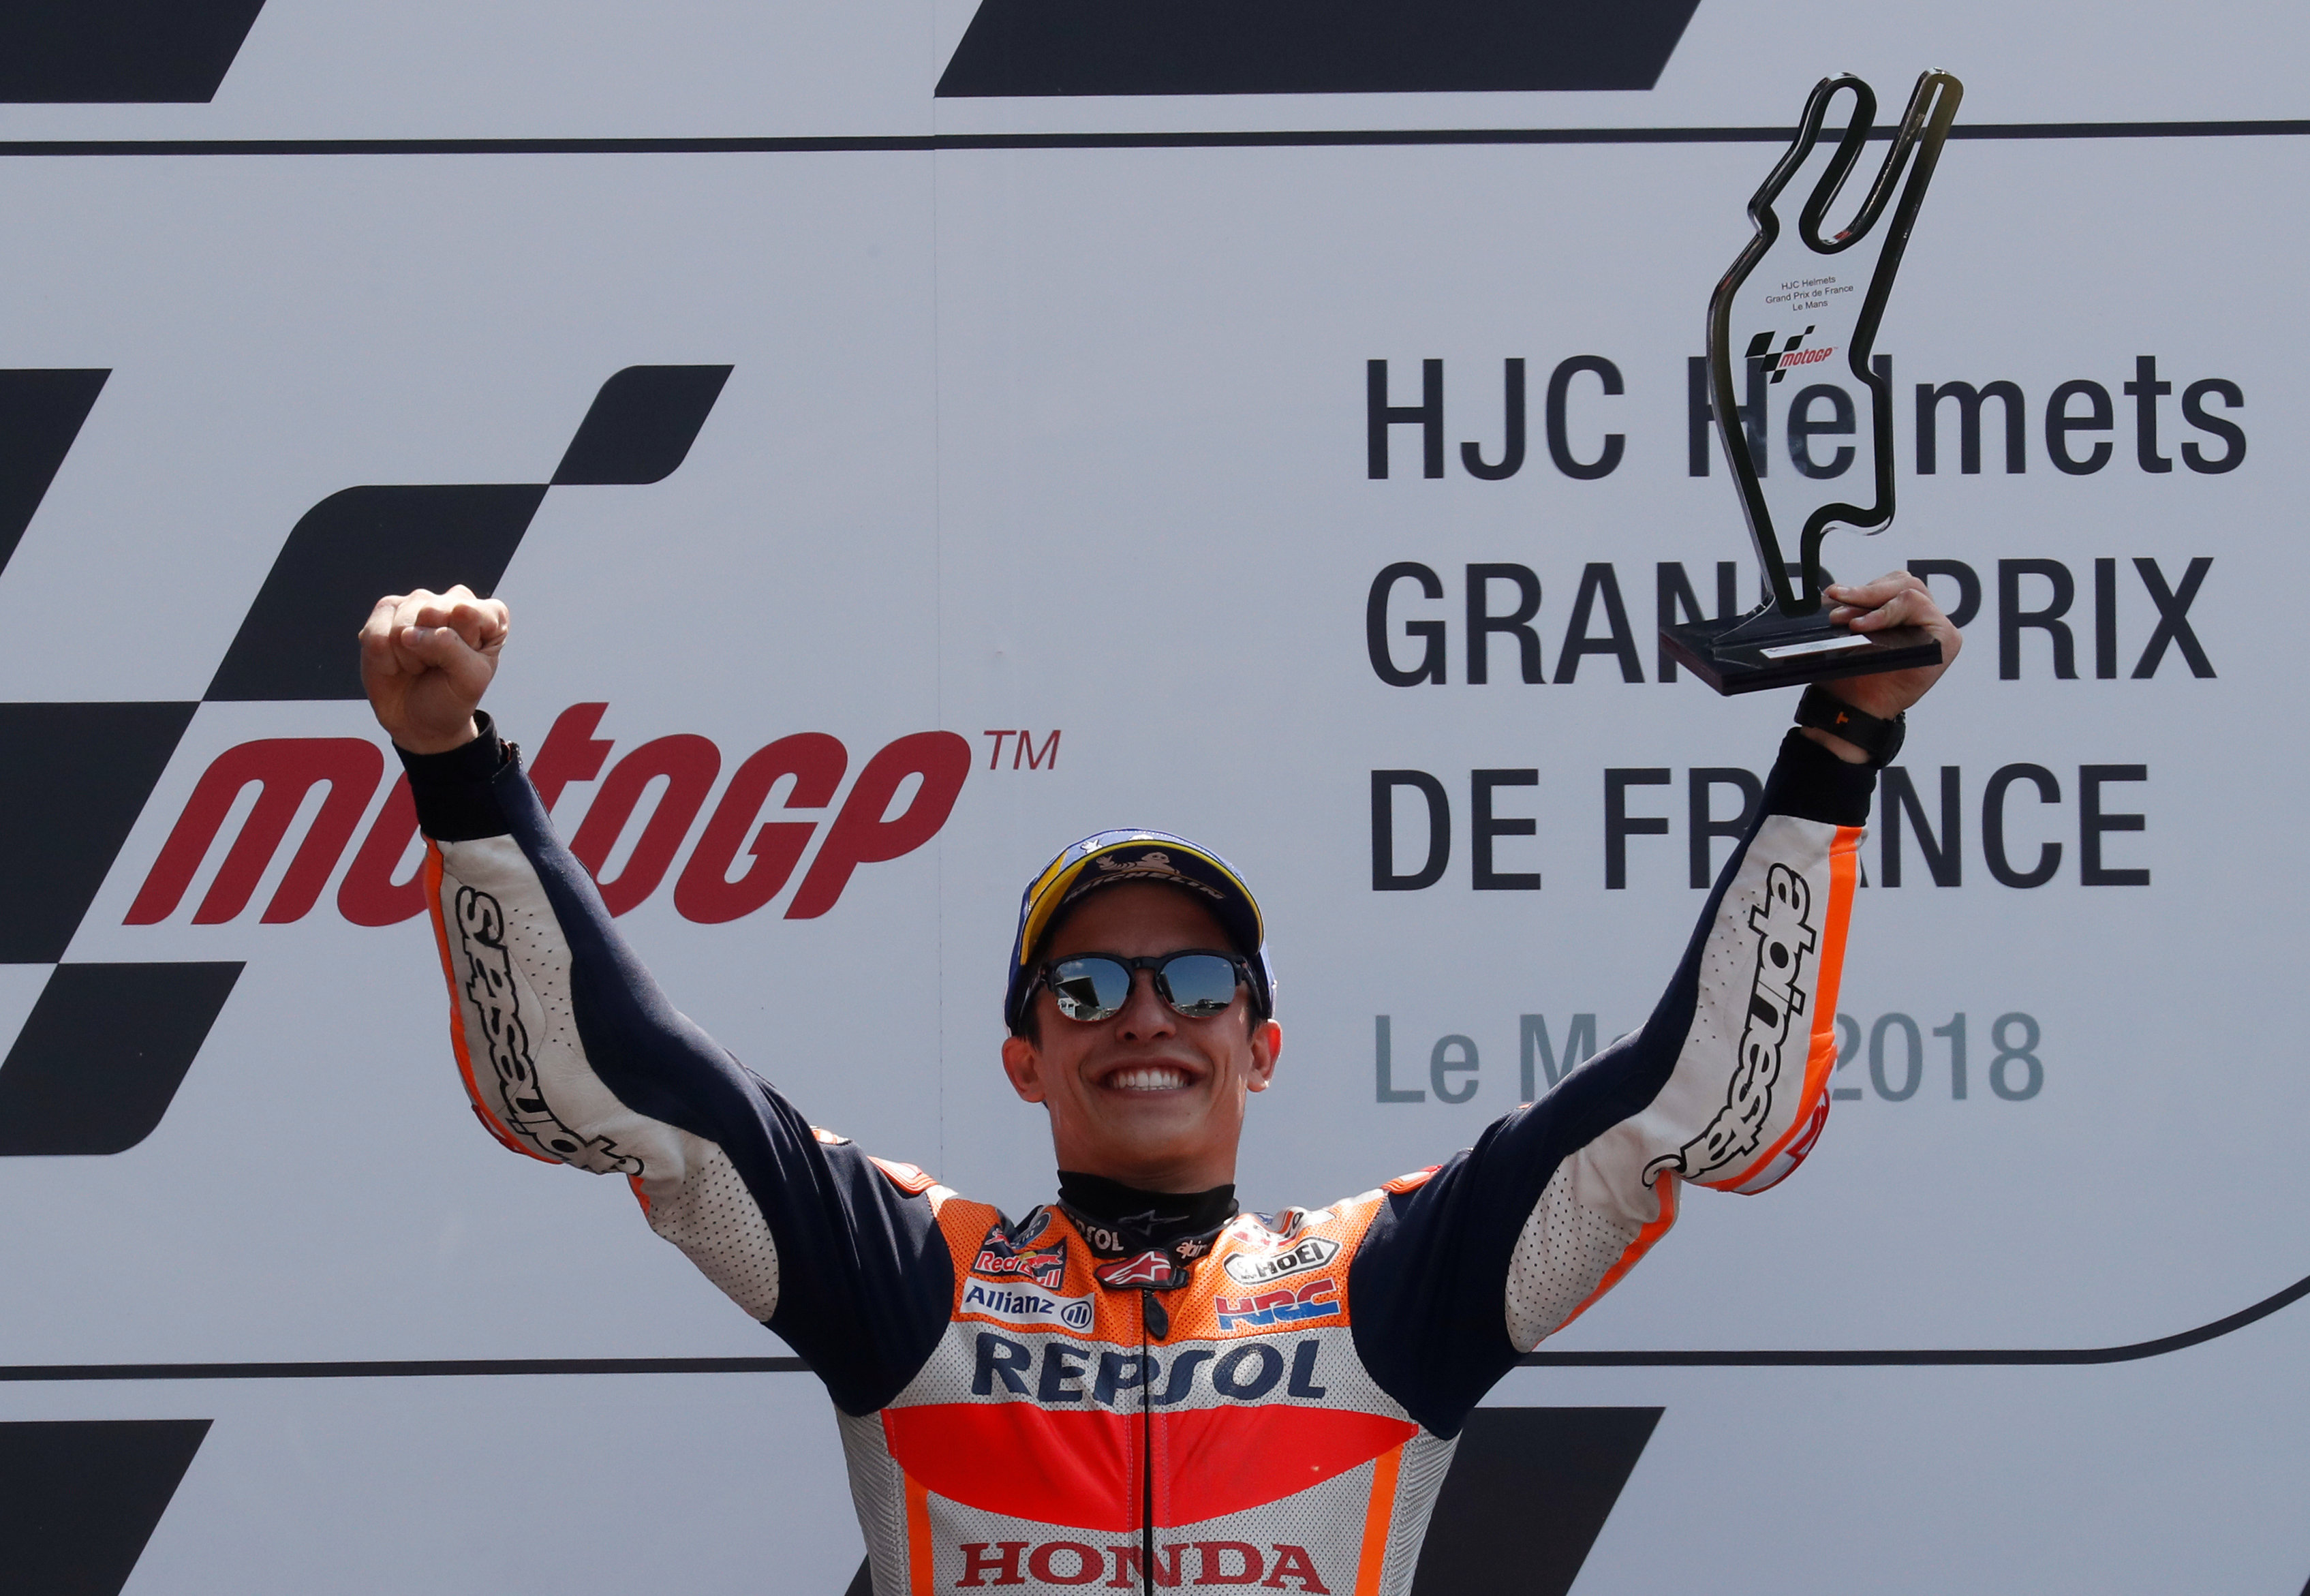 Motorsport: Marquez extends lead with Le Mans victory